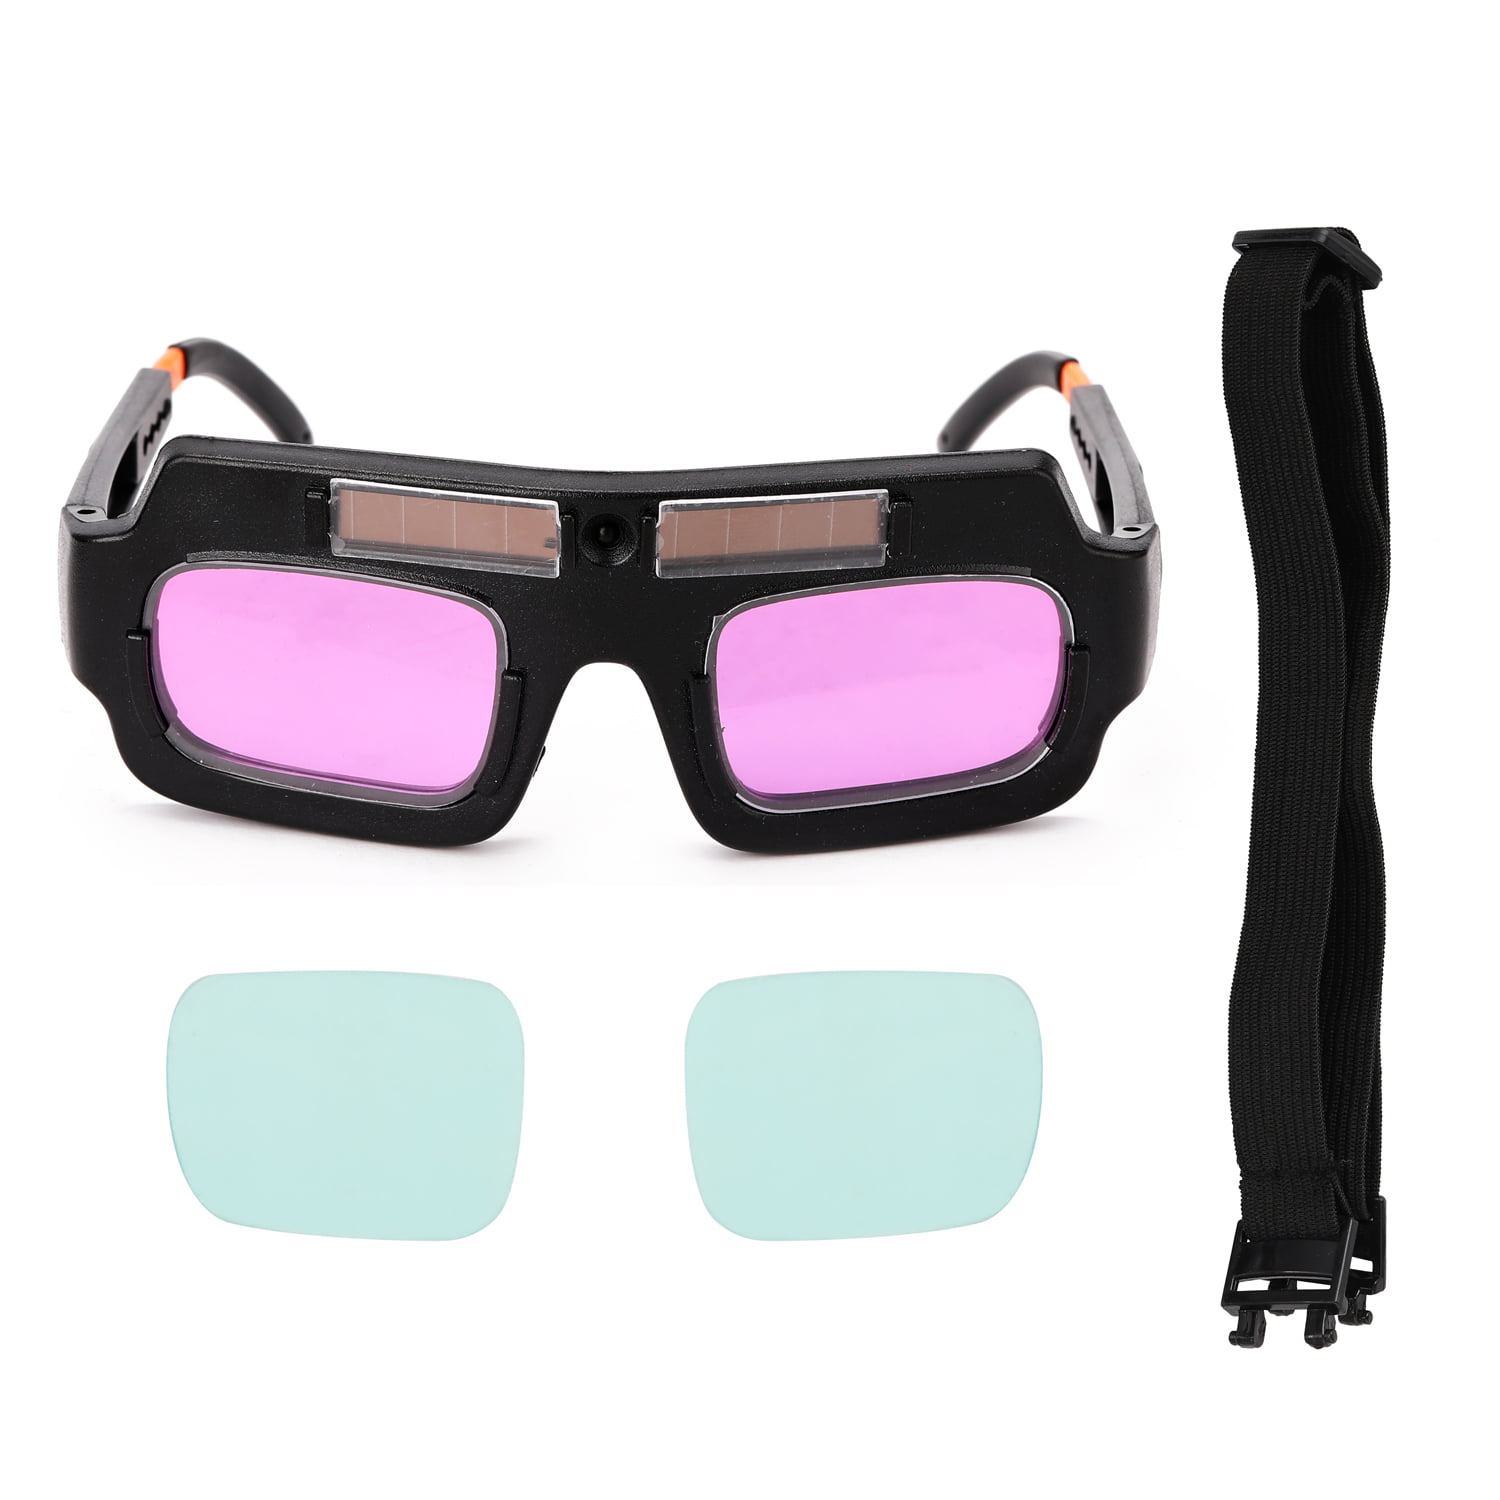 Details about   Solar Powered Auto Darkening Welding Mask Helmet Goggle Welder Glasses Gifts 